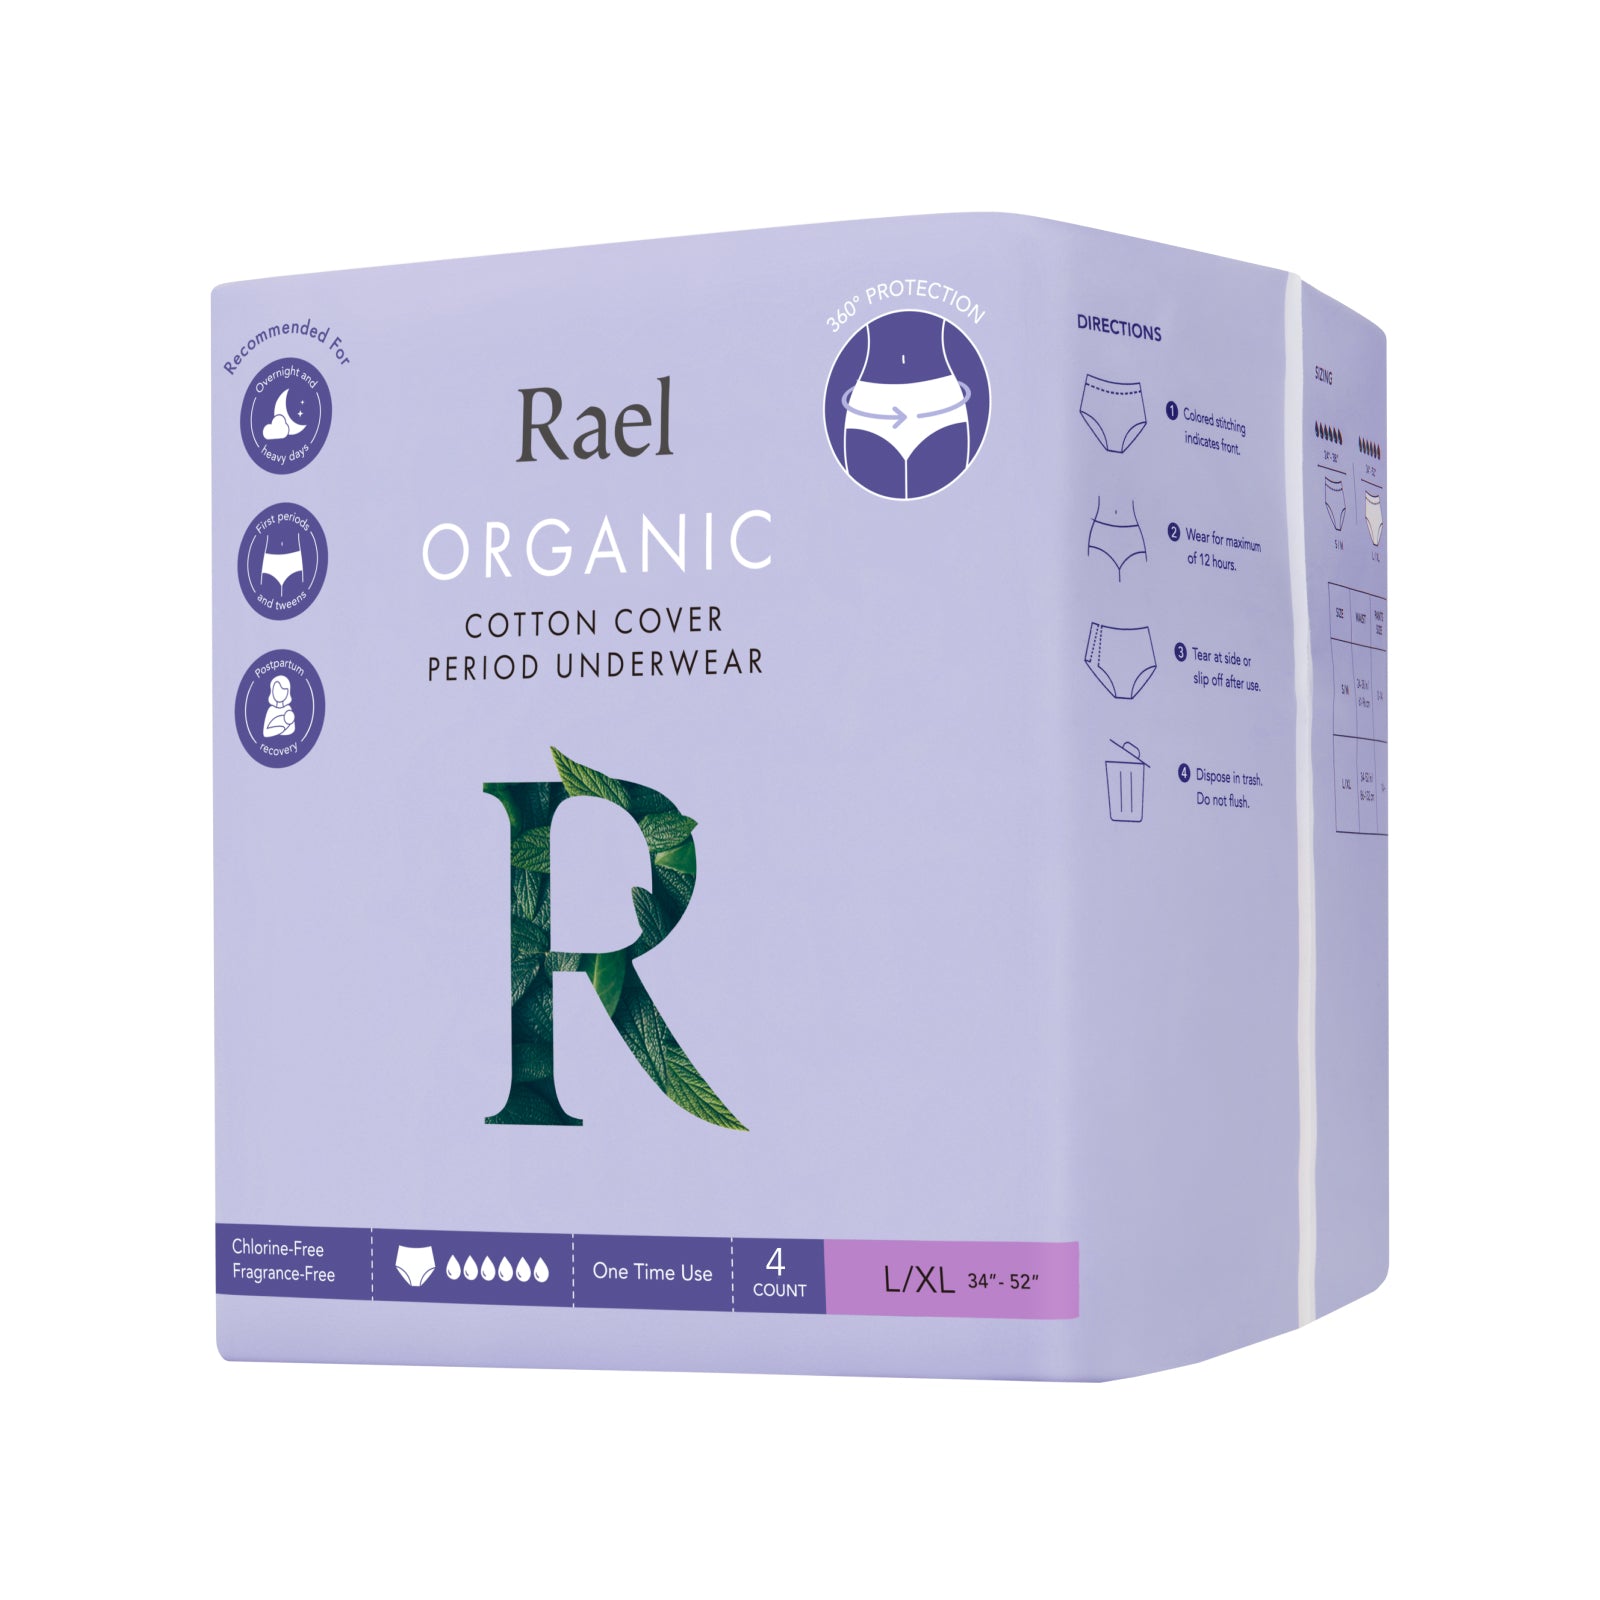 Rael Organic Cotton Period Underwear 5s (L/XL)